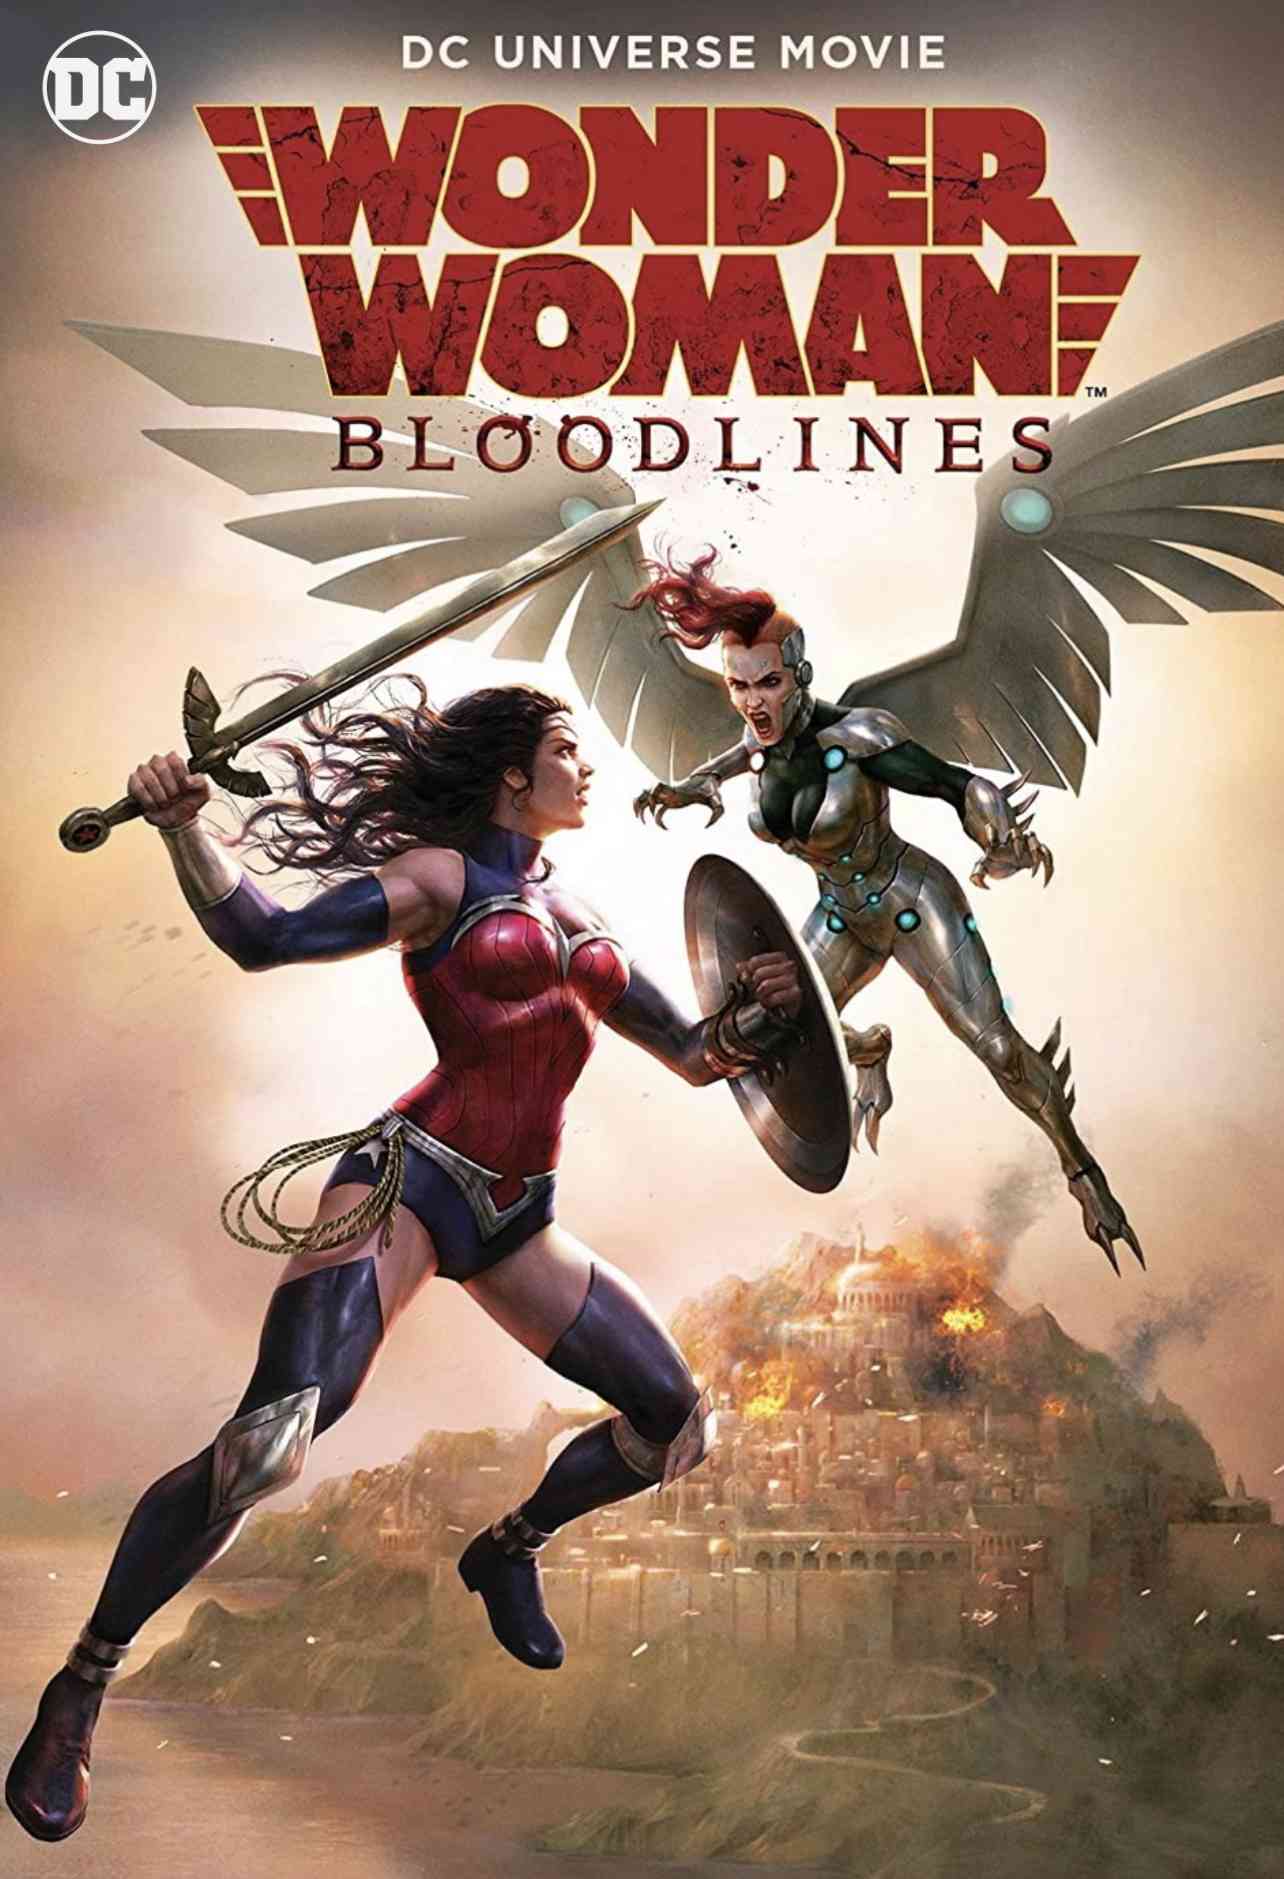 FULL MOVIE: Wonder Woman: Bloodlines (2019)